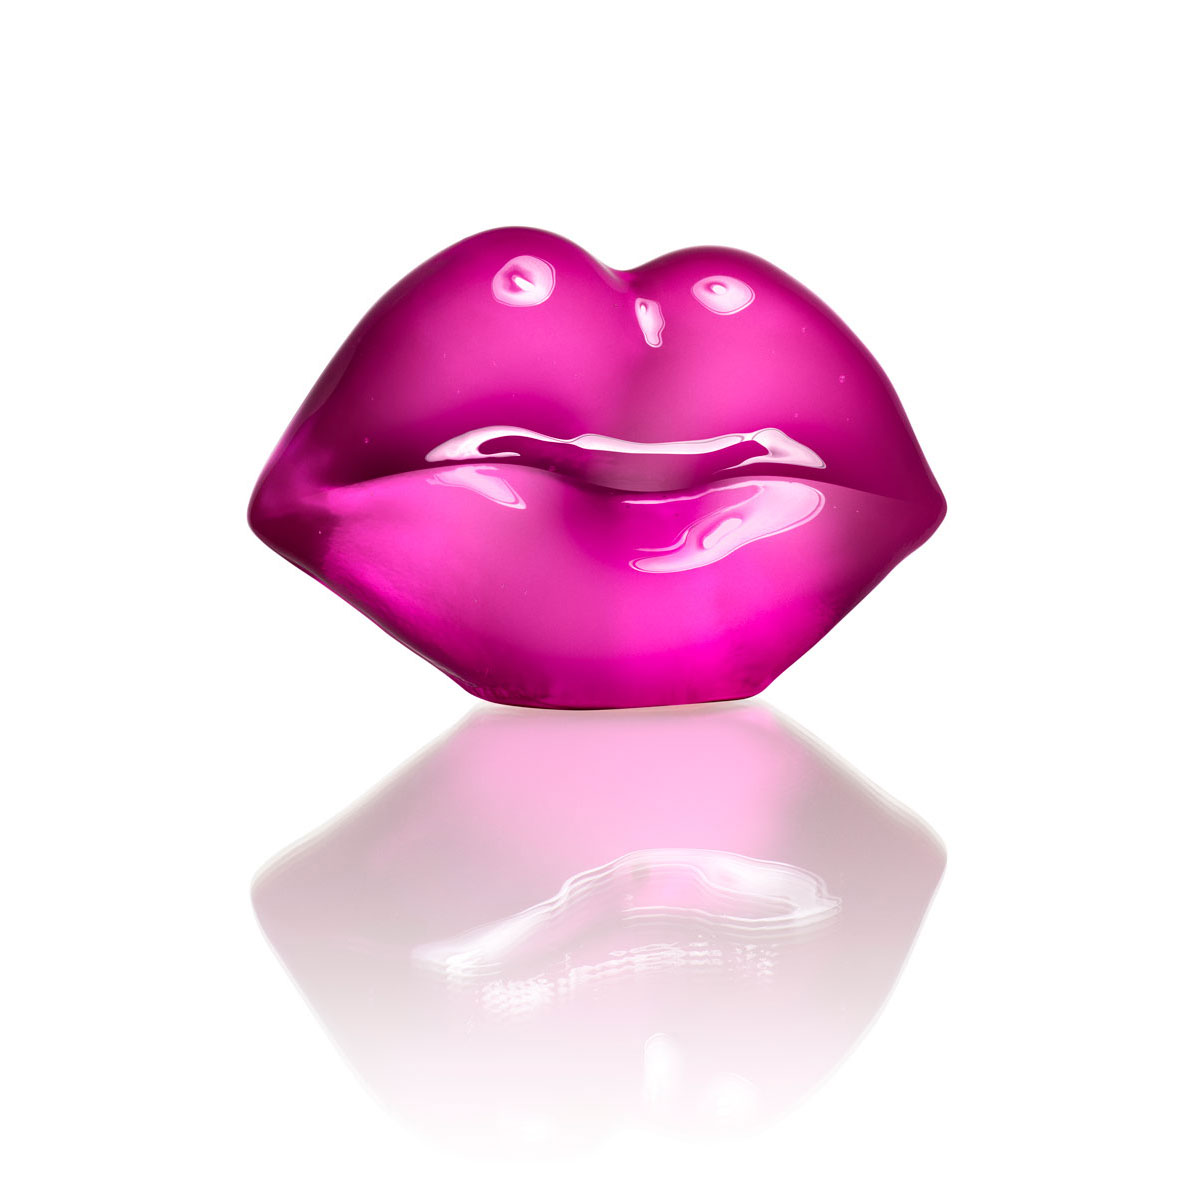 Kosta Boda Make Up Hot Lips, Cerise